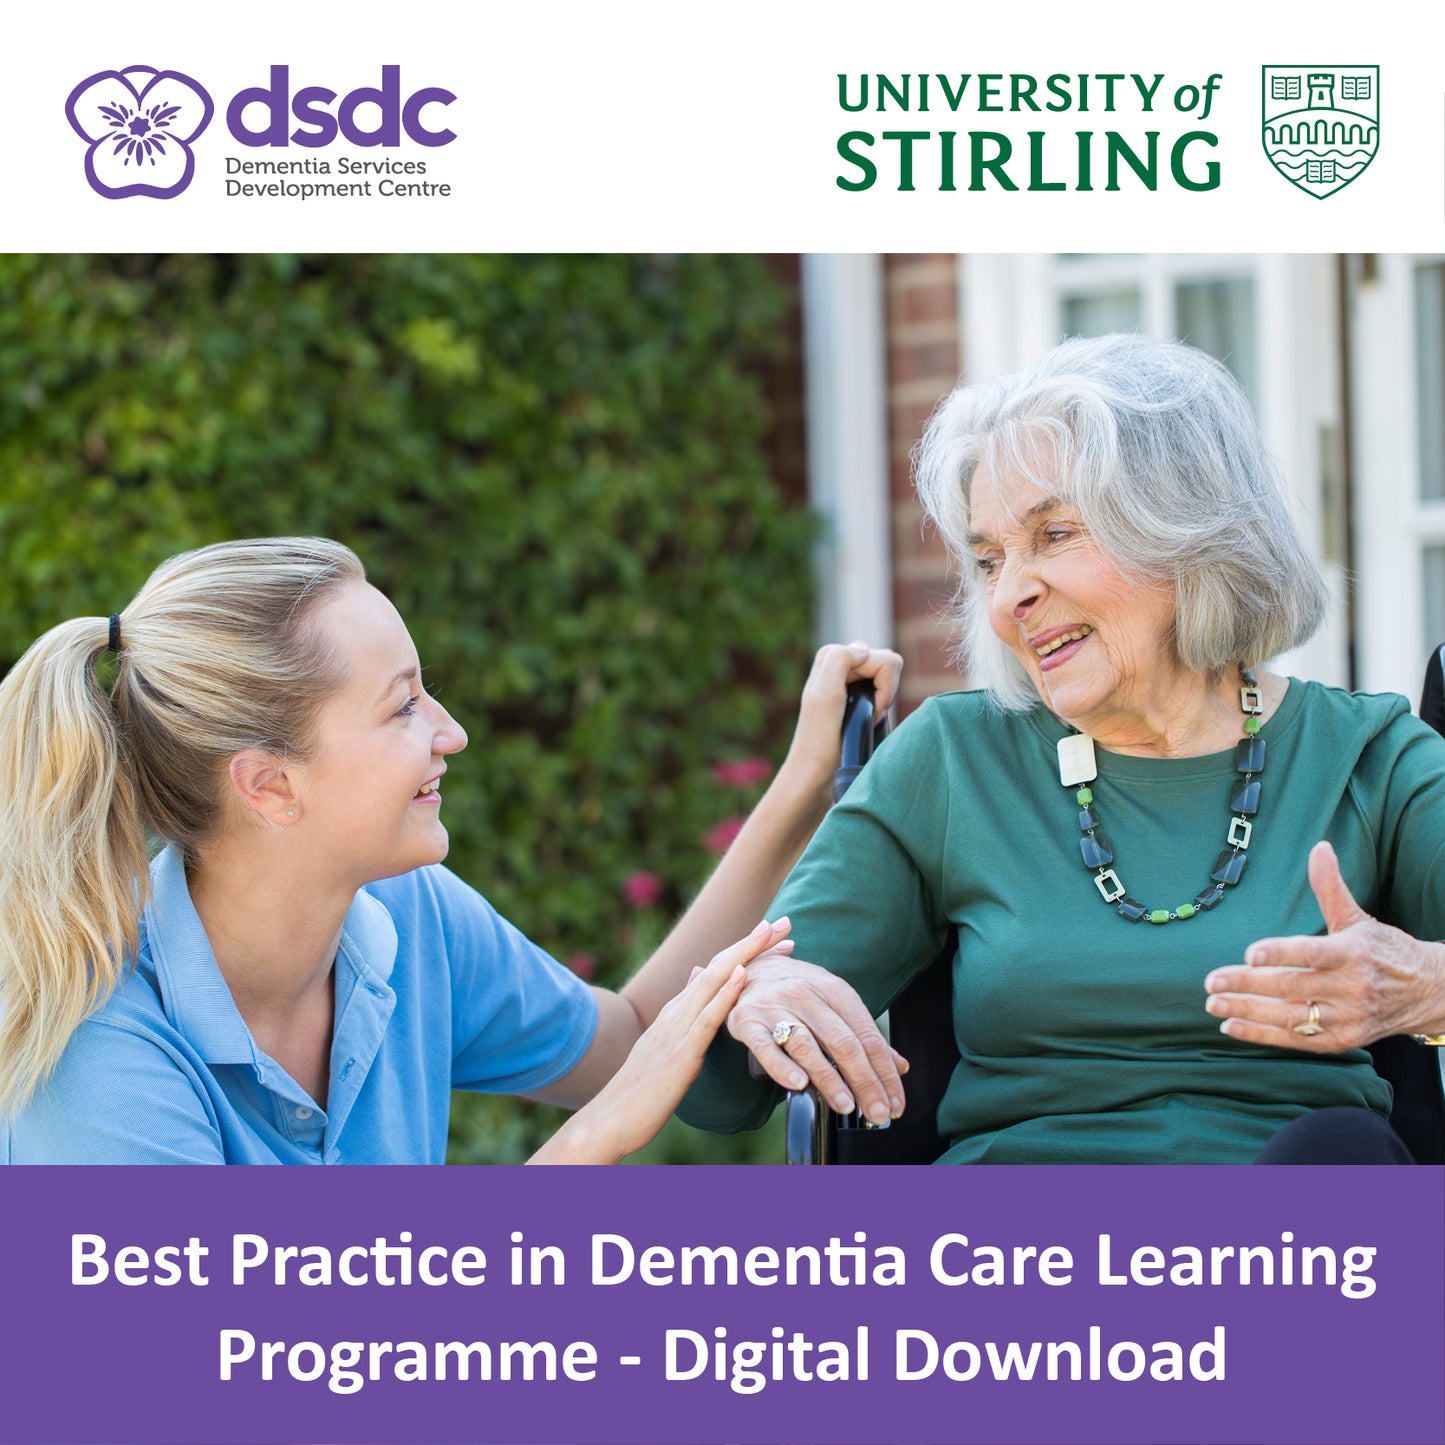 Best Practice in dementia care learning programme - digital download